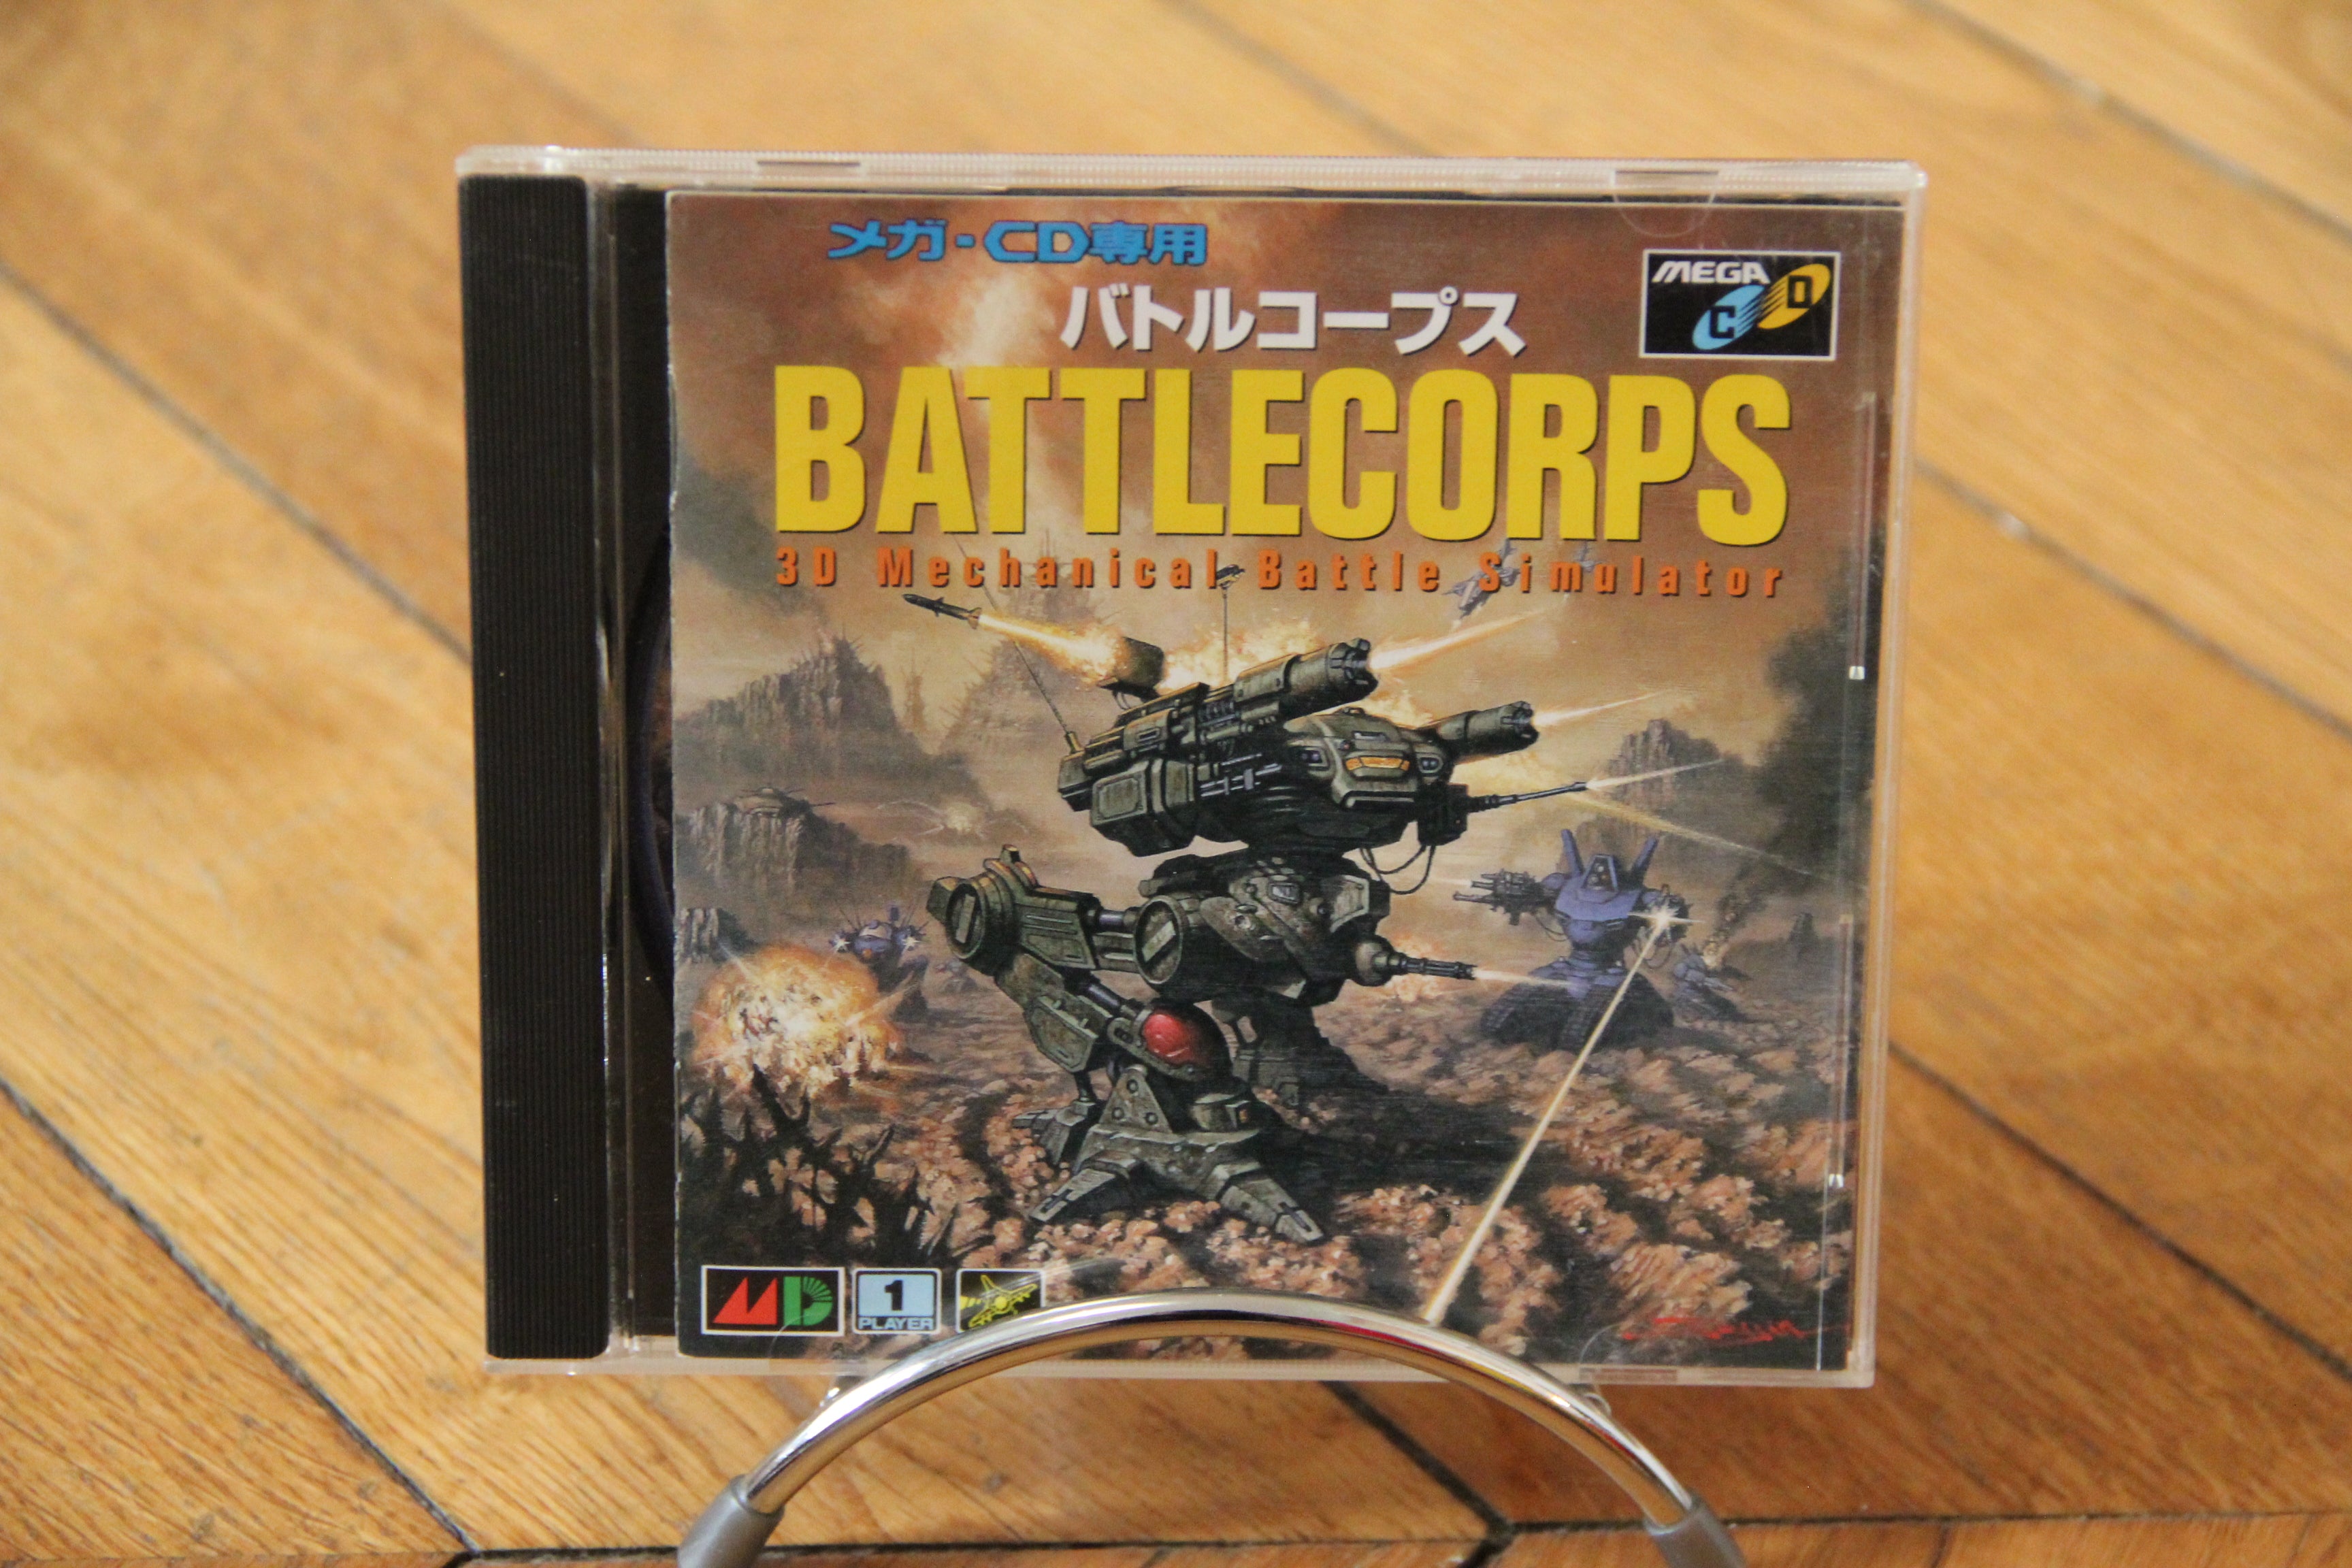 Battlecorps 3D Mechanical Mega CD Sega Megadrive Games Japan T-60194 Boxed